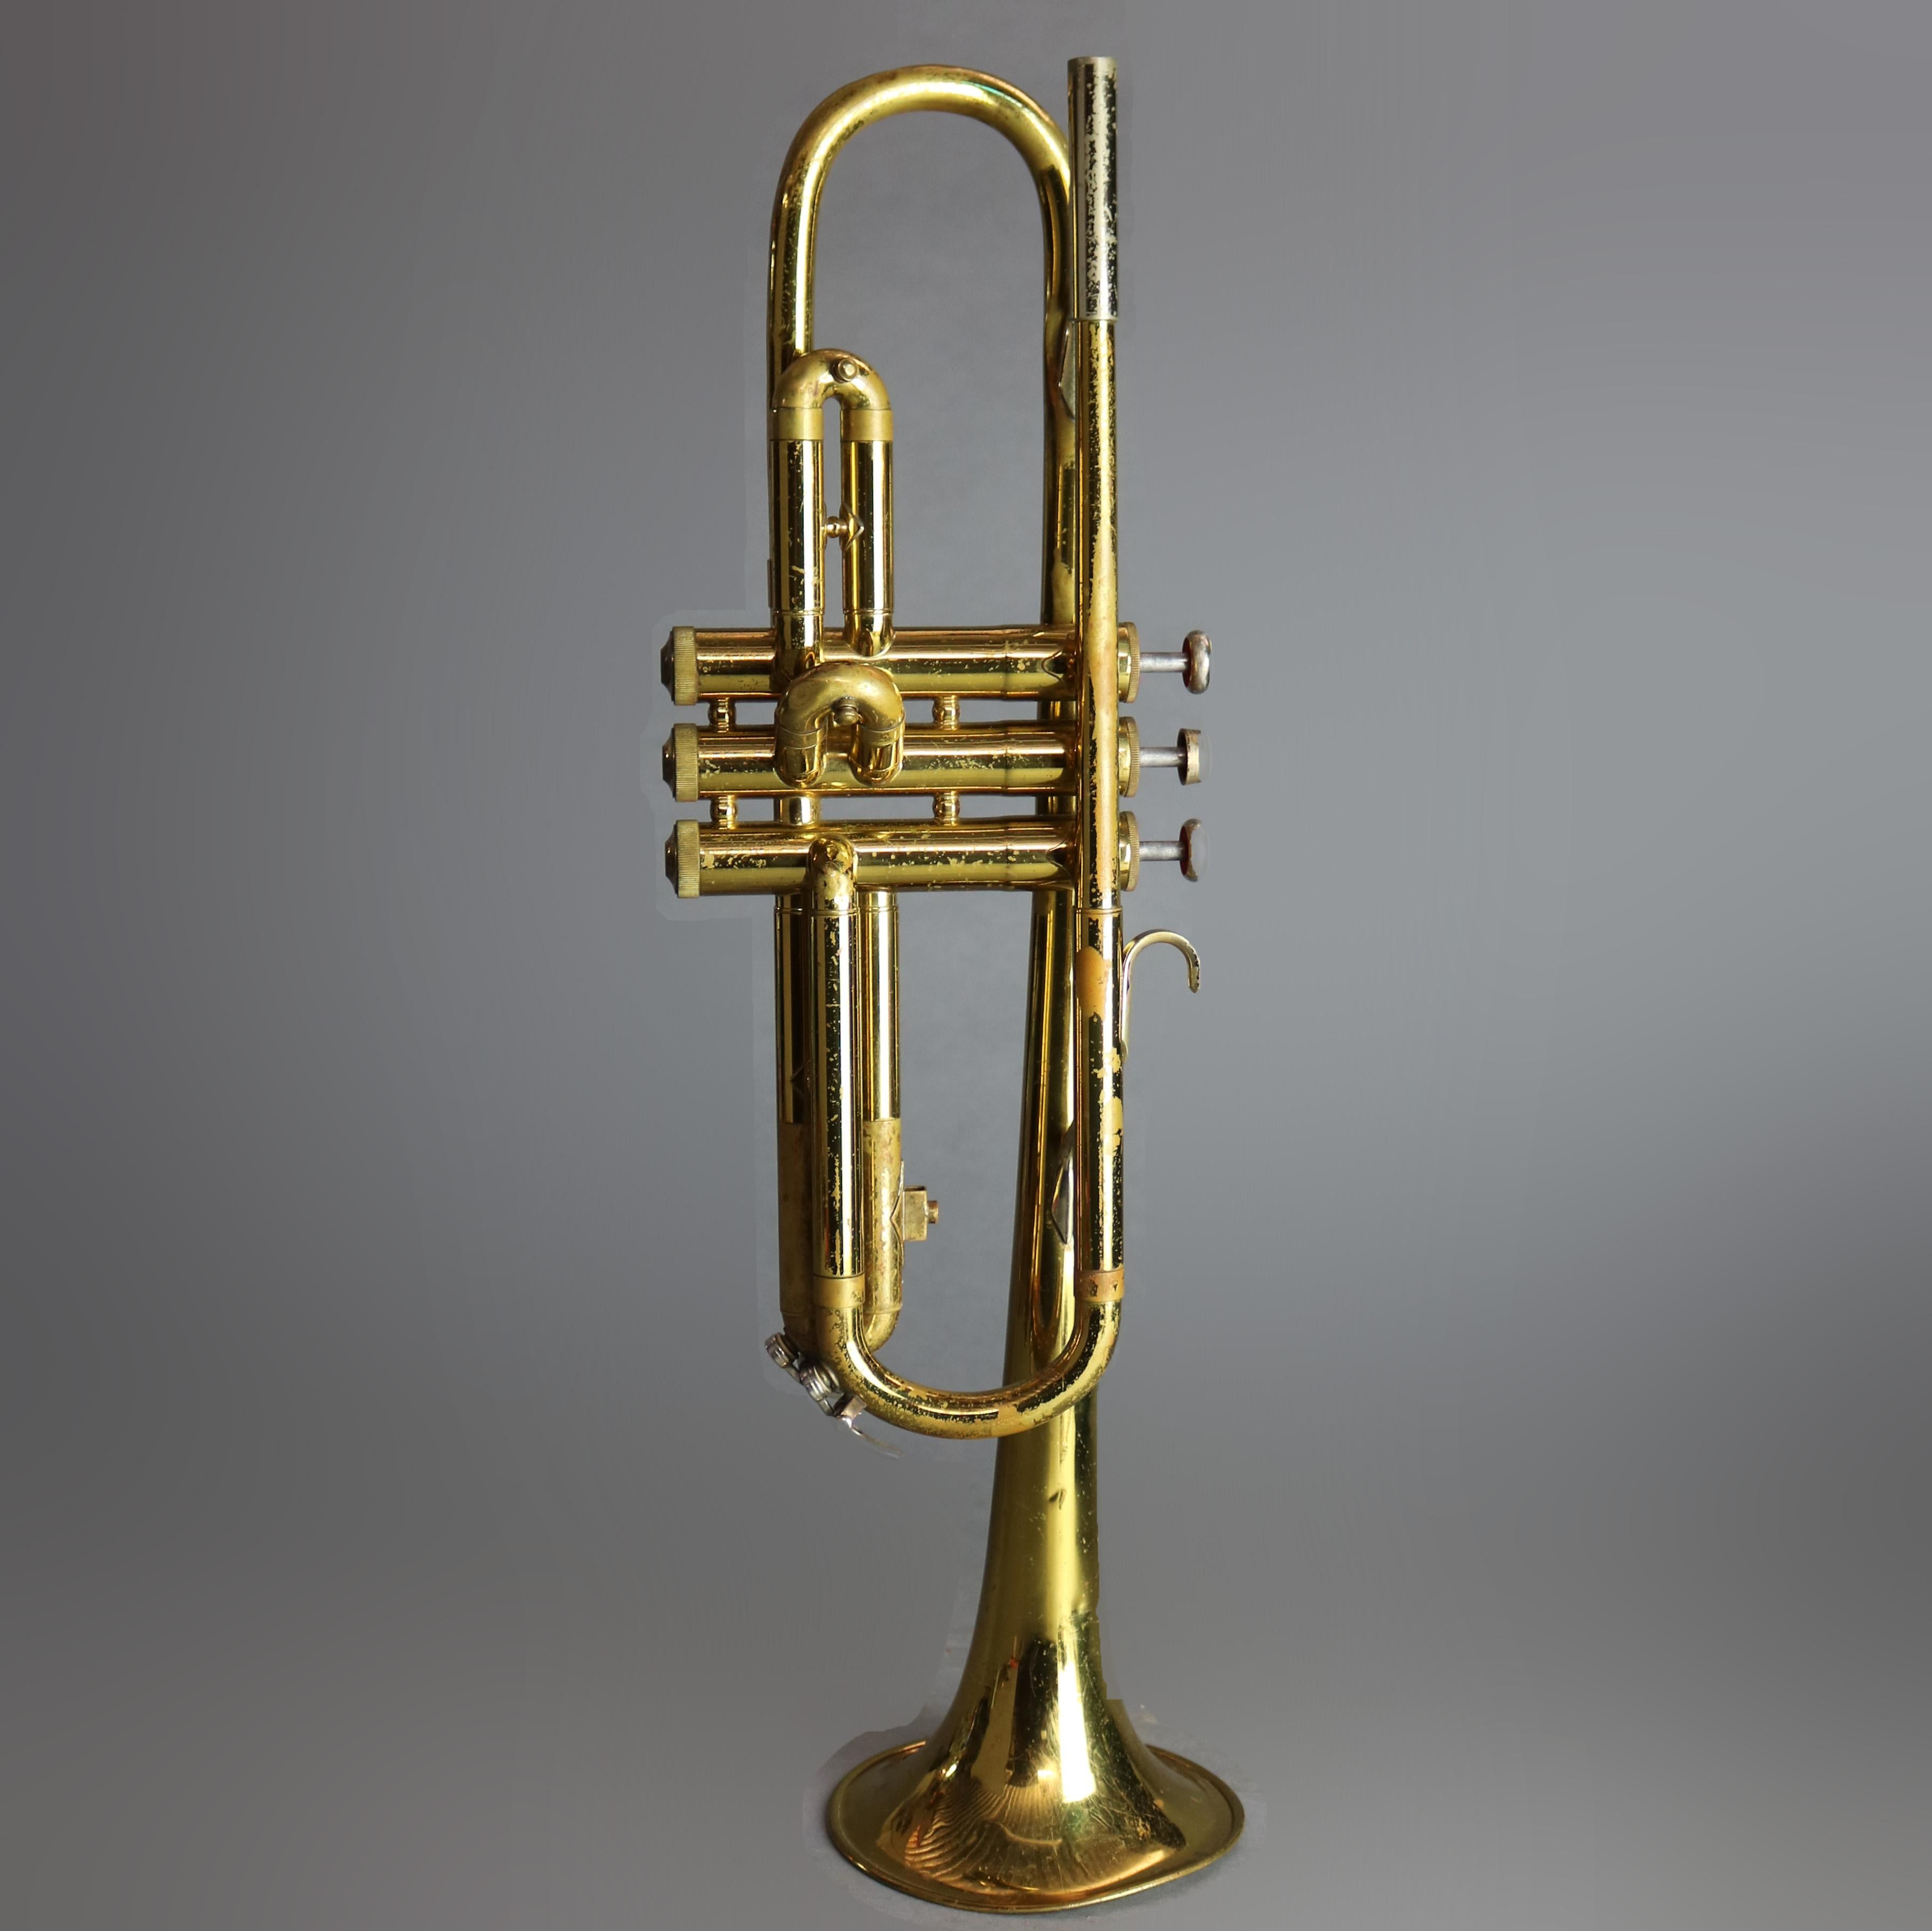 A vintage Bundy brass trumpet with original case, 20th century

Measures: 6